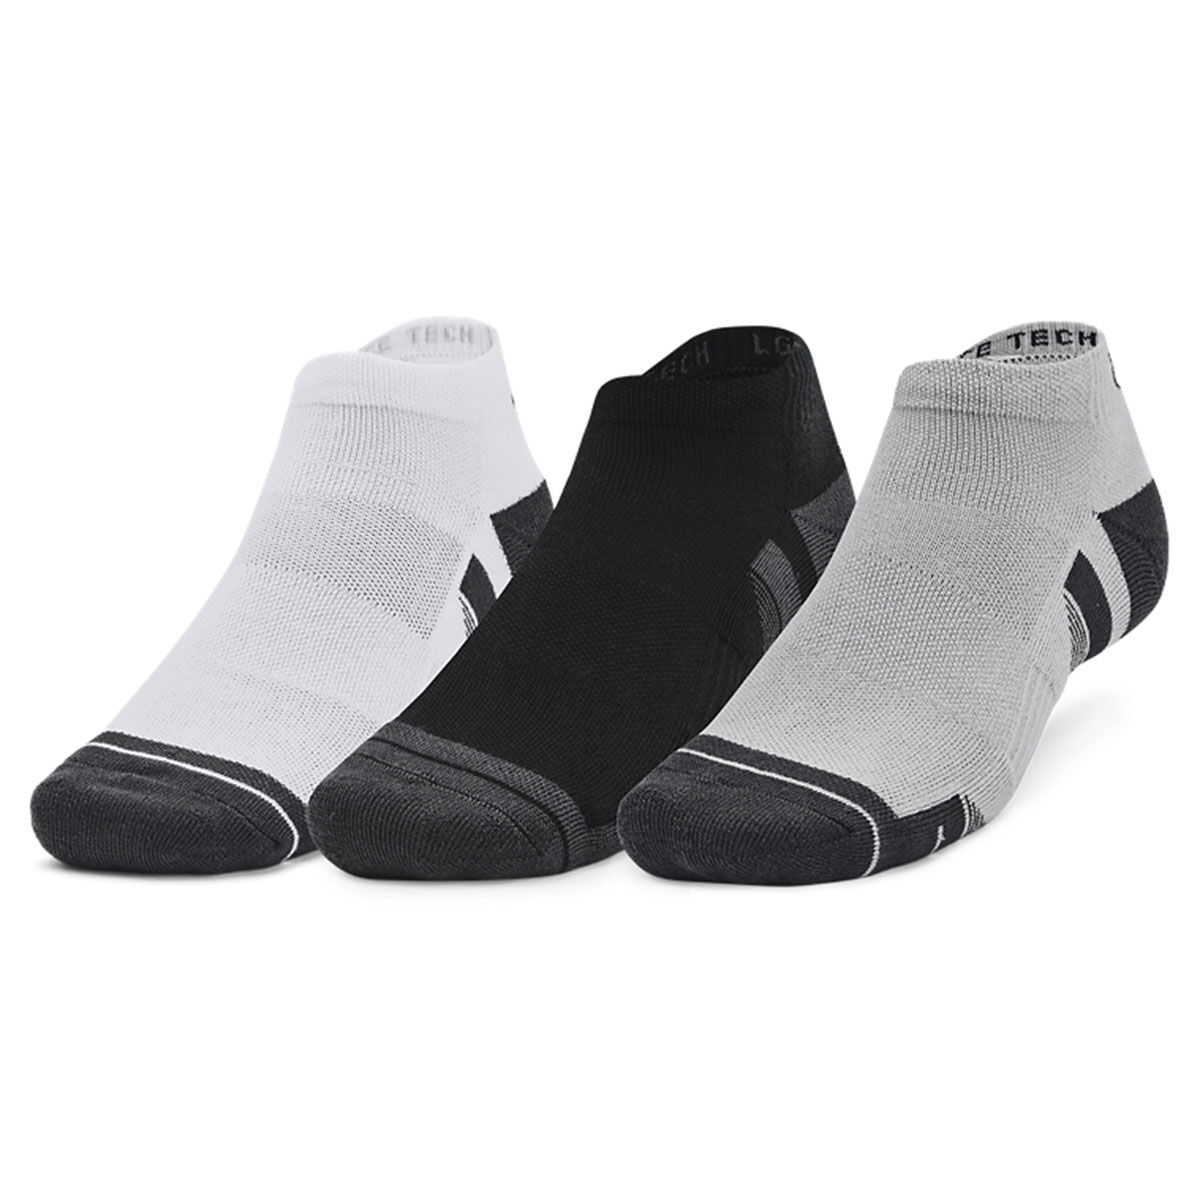 Under Armour Men’s Performance Tech Low Cut 3 Pair Pack Golf Socks, Mens, Mod gray/white, Large/xl | American Golf